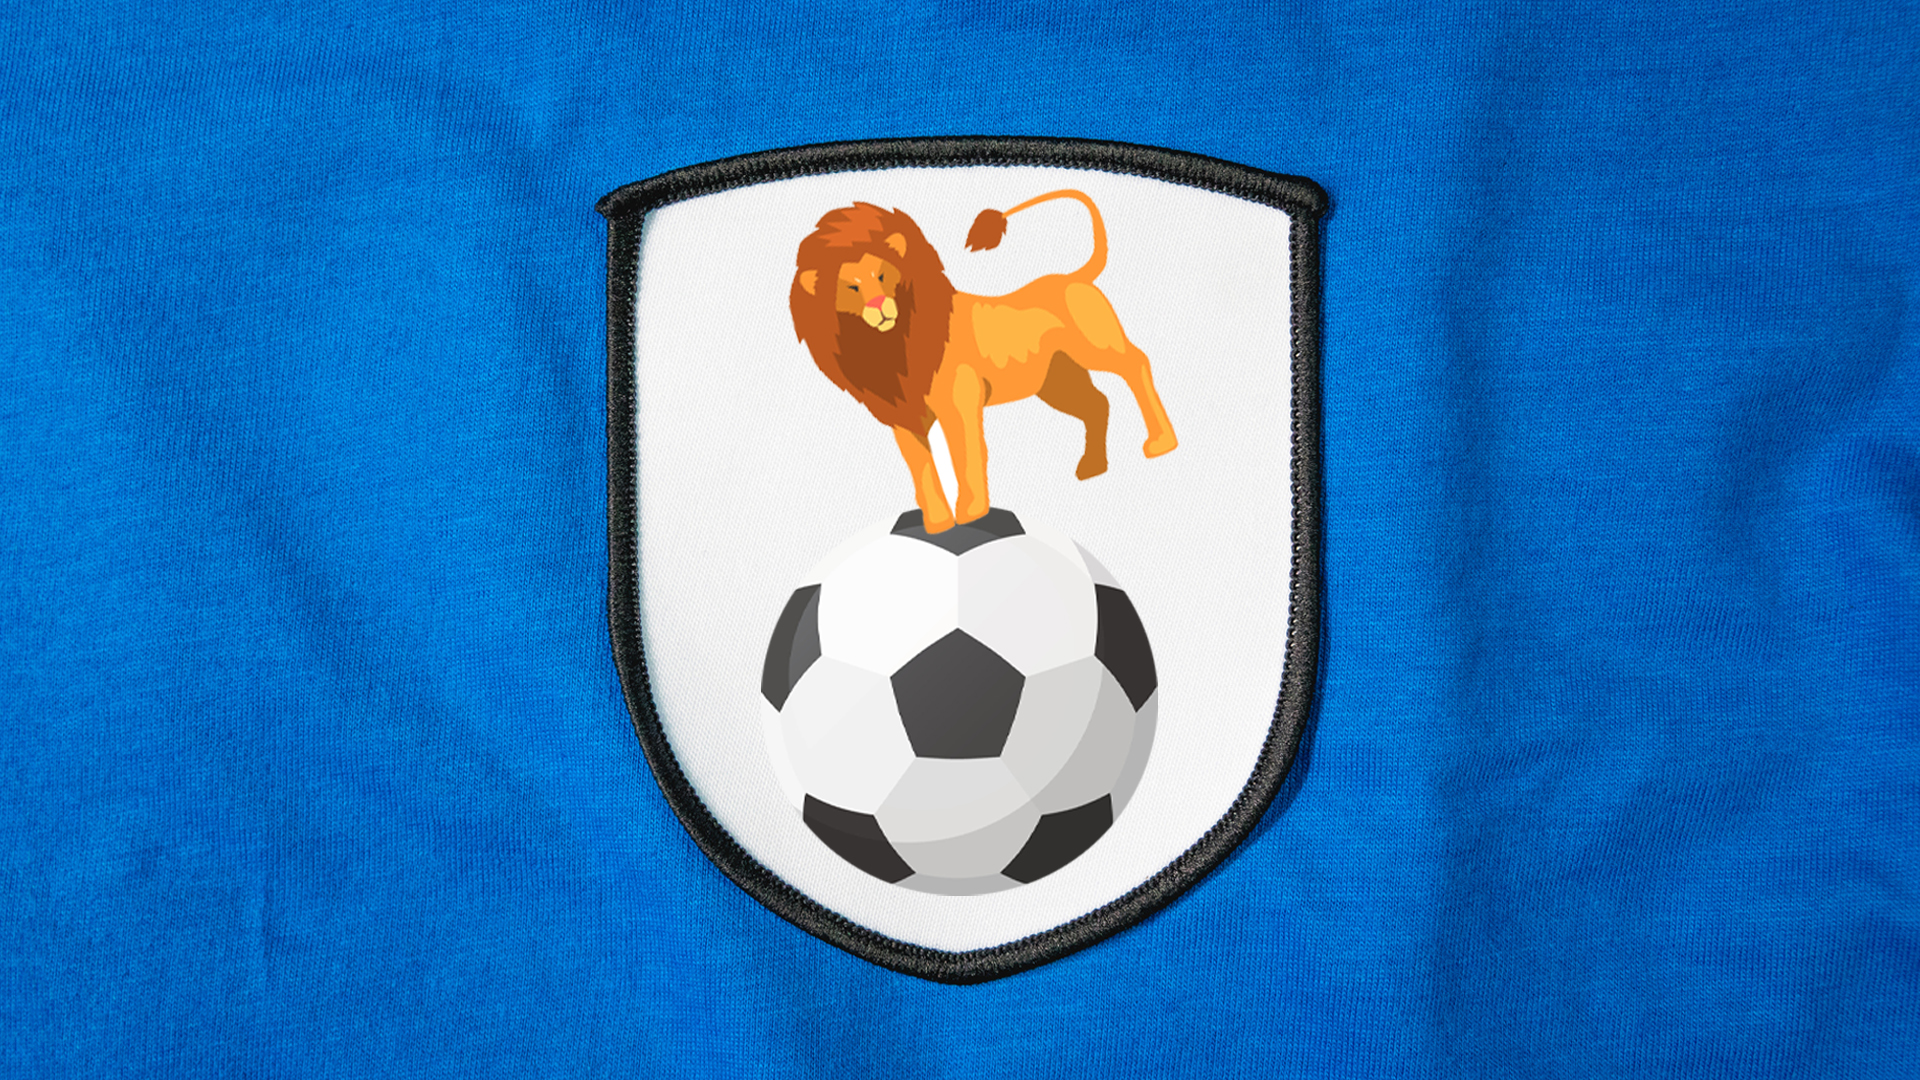 A football badge